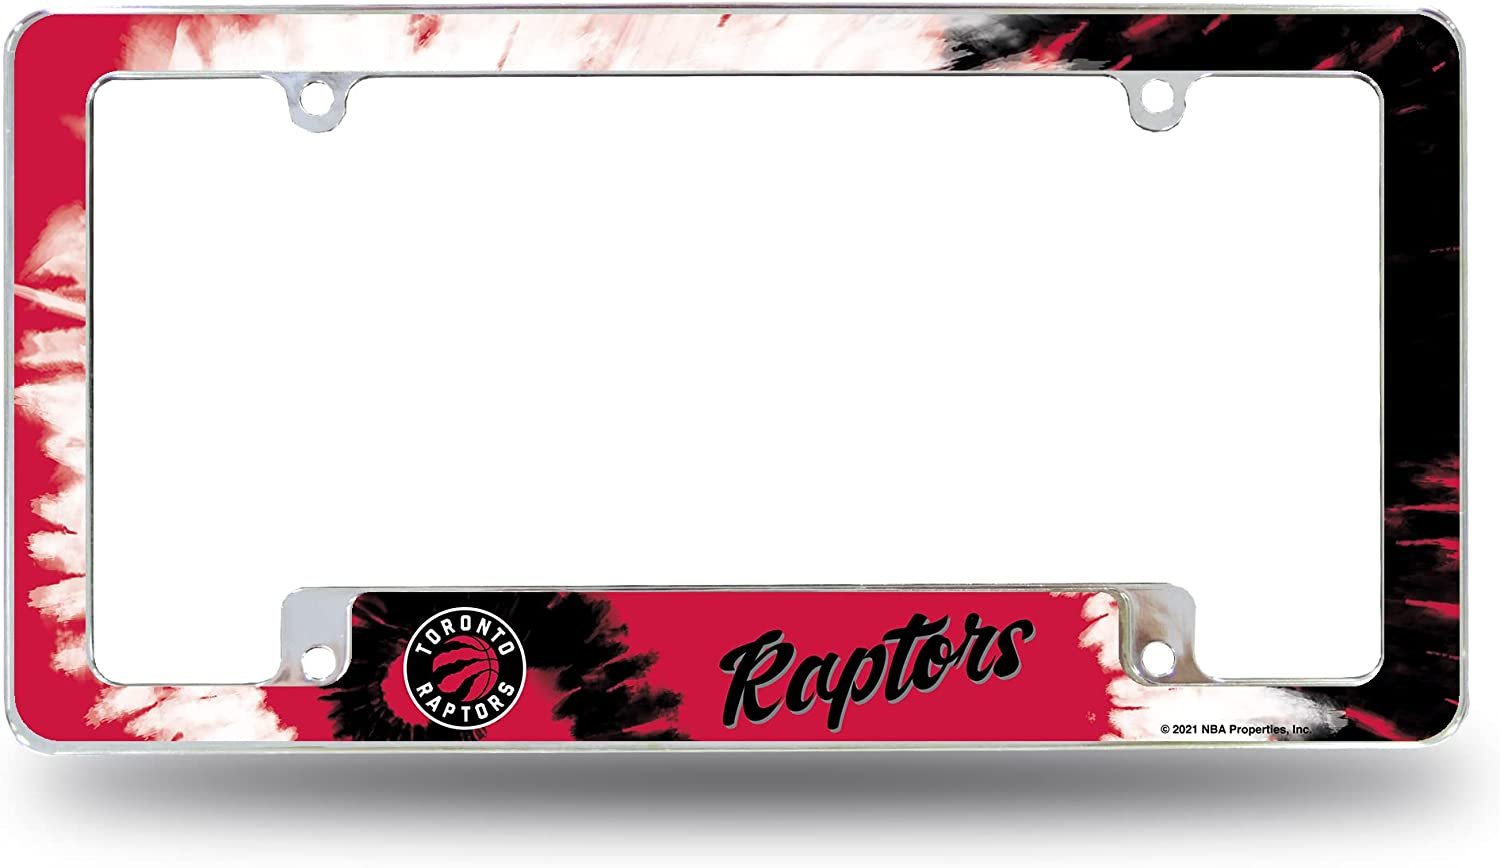 Toronto Raptors Metal License Plate Frame Chrome Tag Cover Tie Dye Design 6x12 Inch